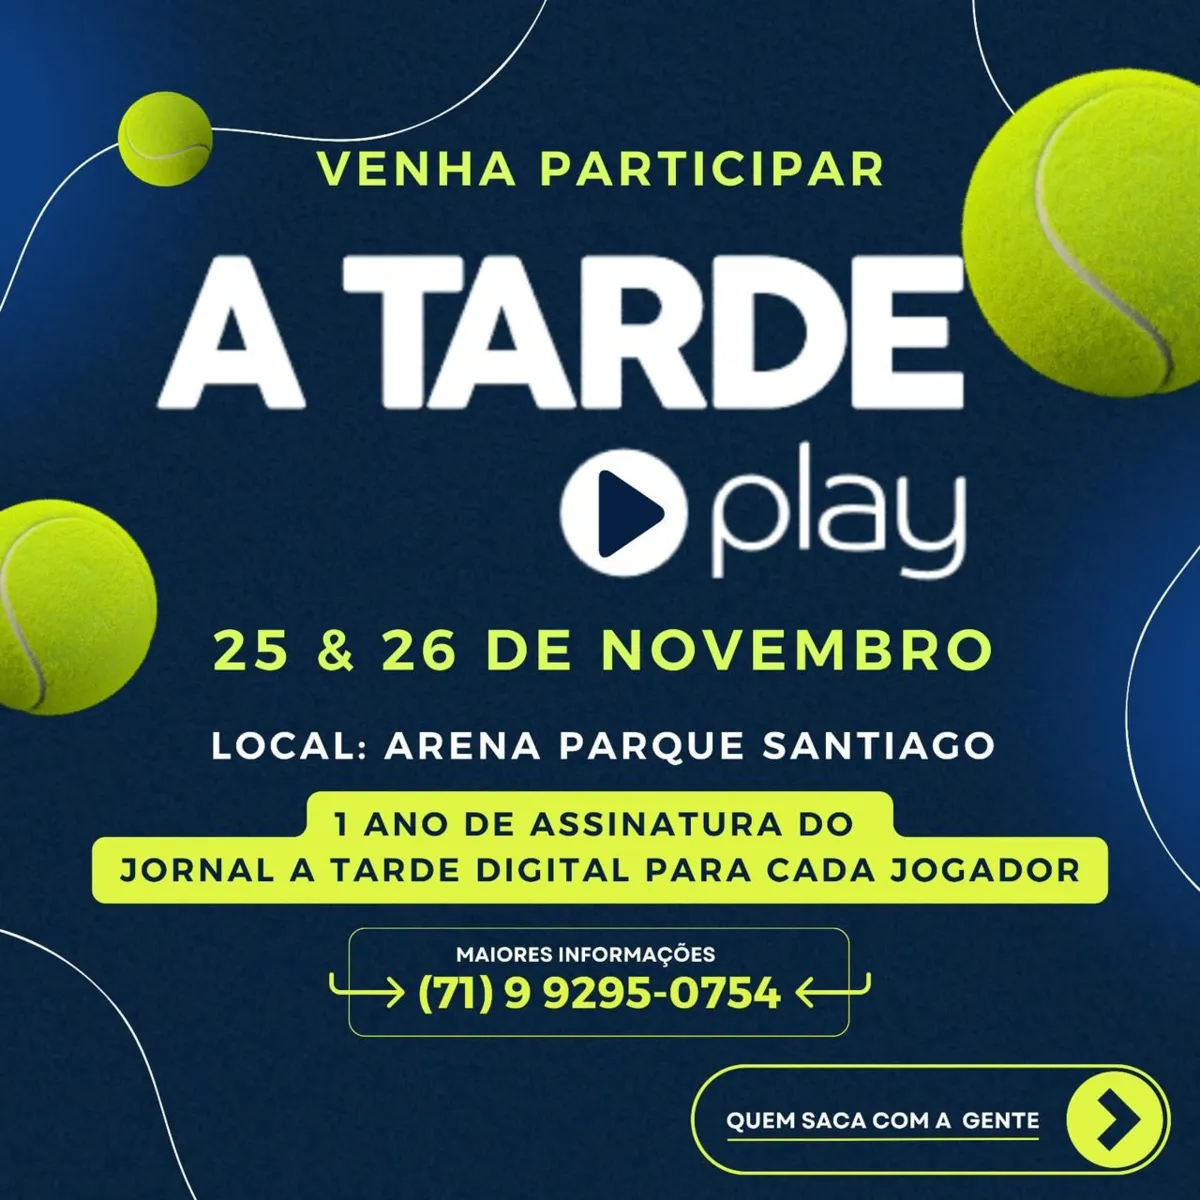 Grupo A TARDE realiza campeonato de tênis